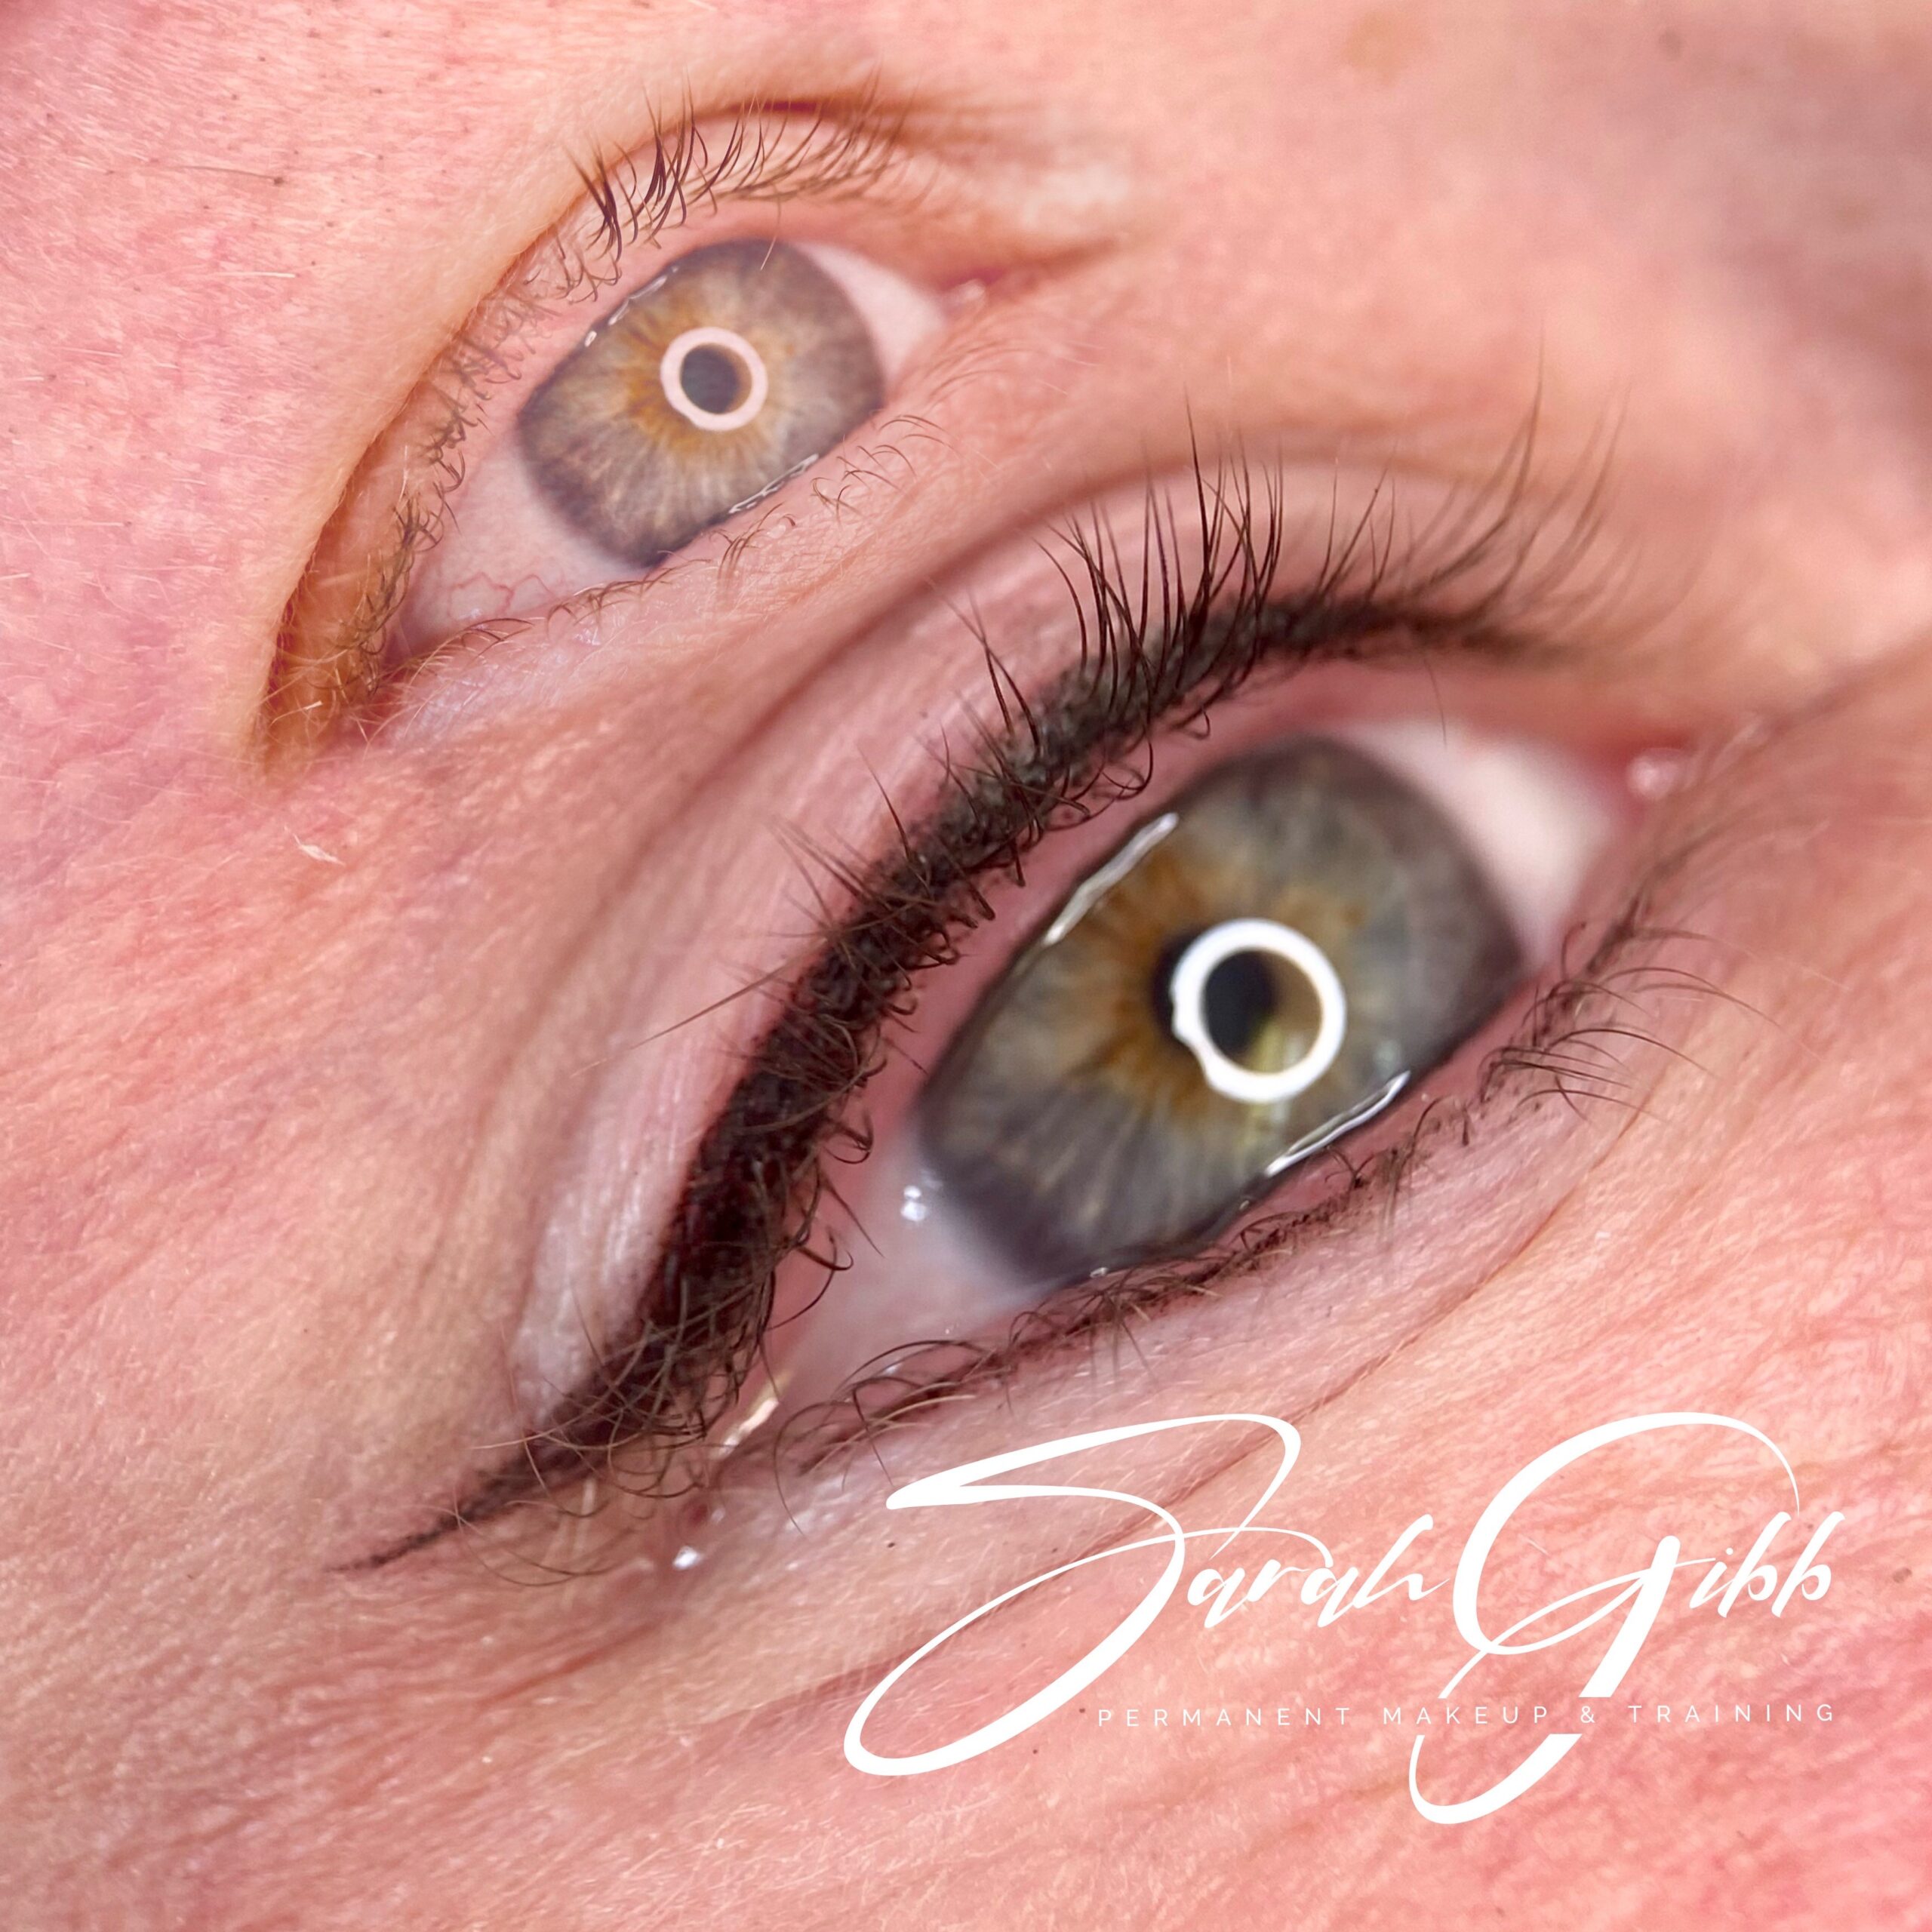 Permanent Makeup for Eyes. Upper Eyeliner Tattoo. Sarah Gibb